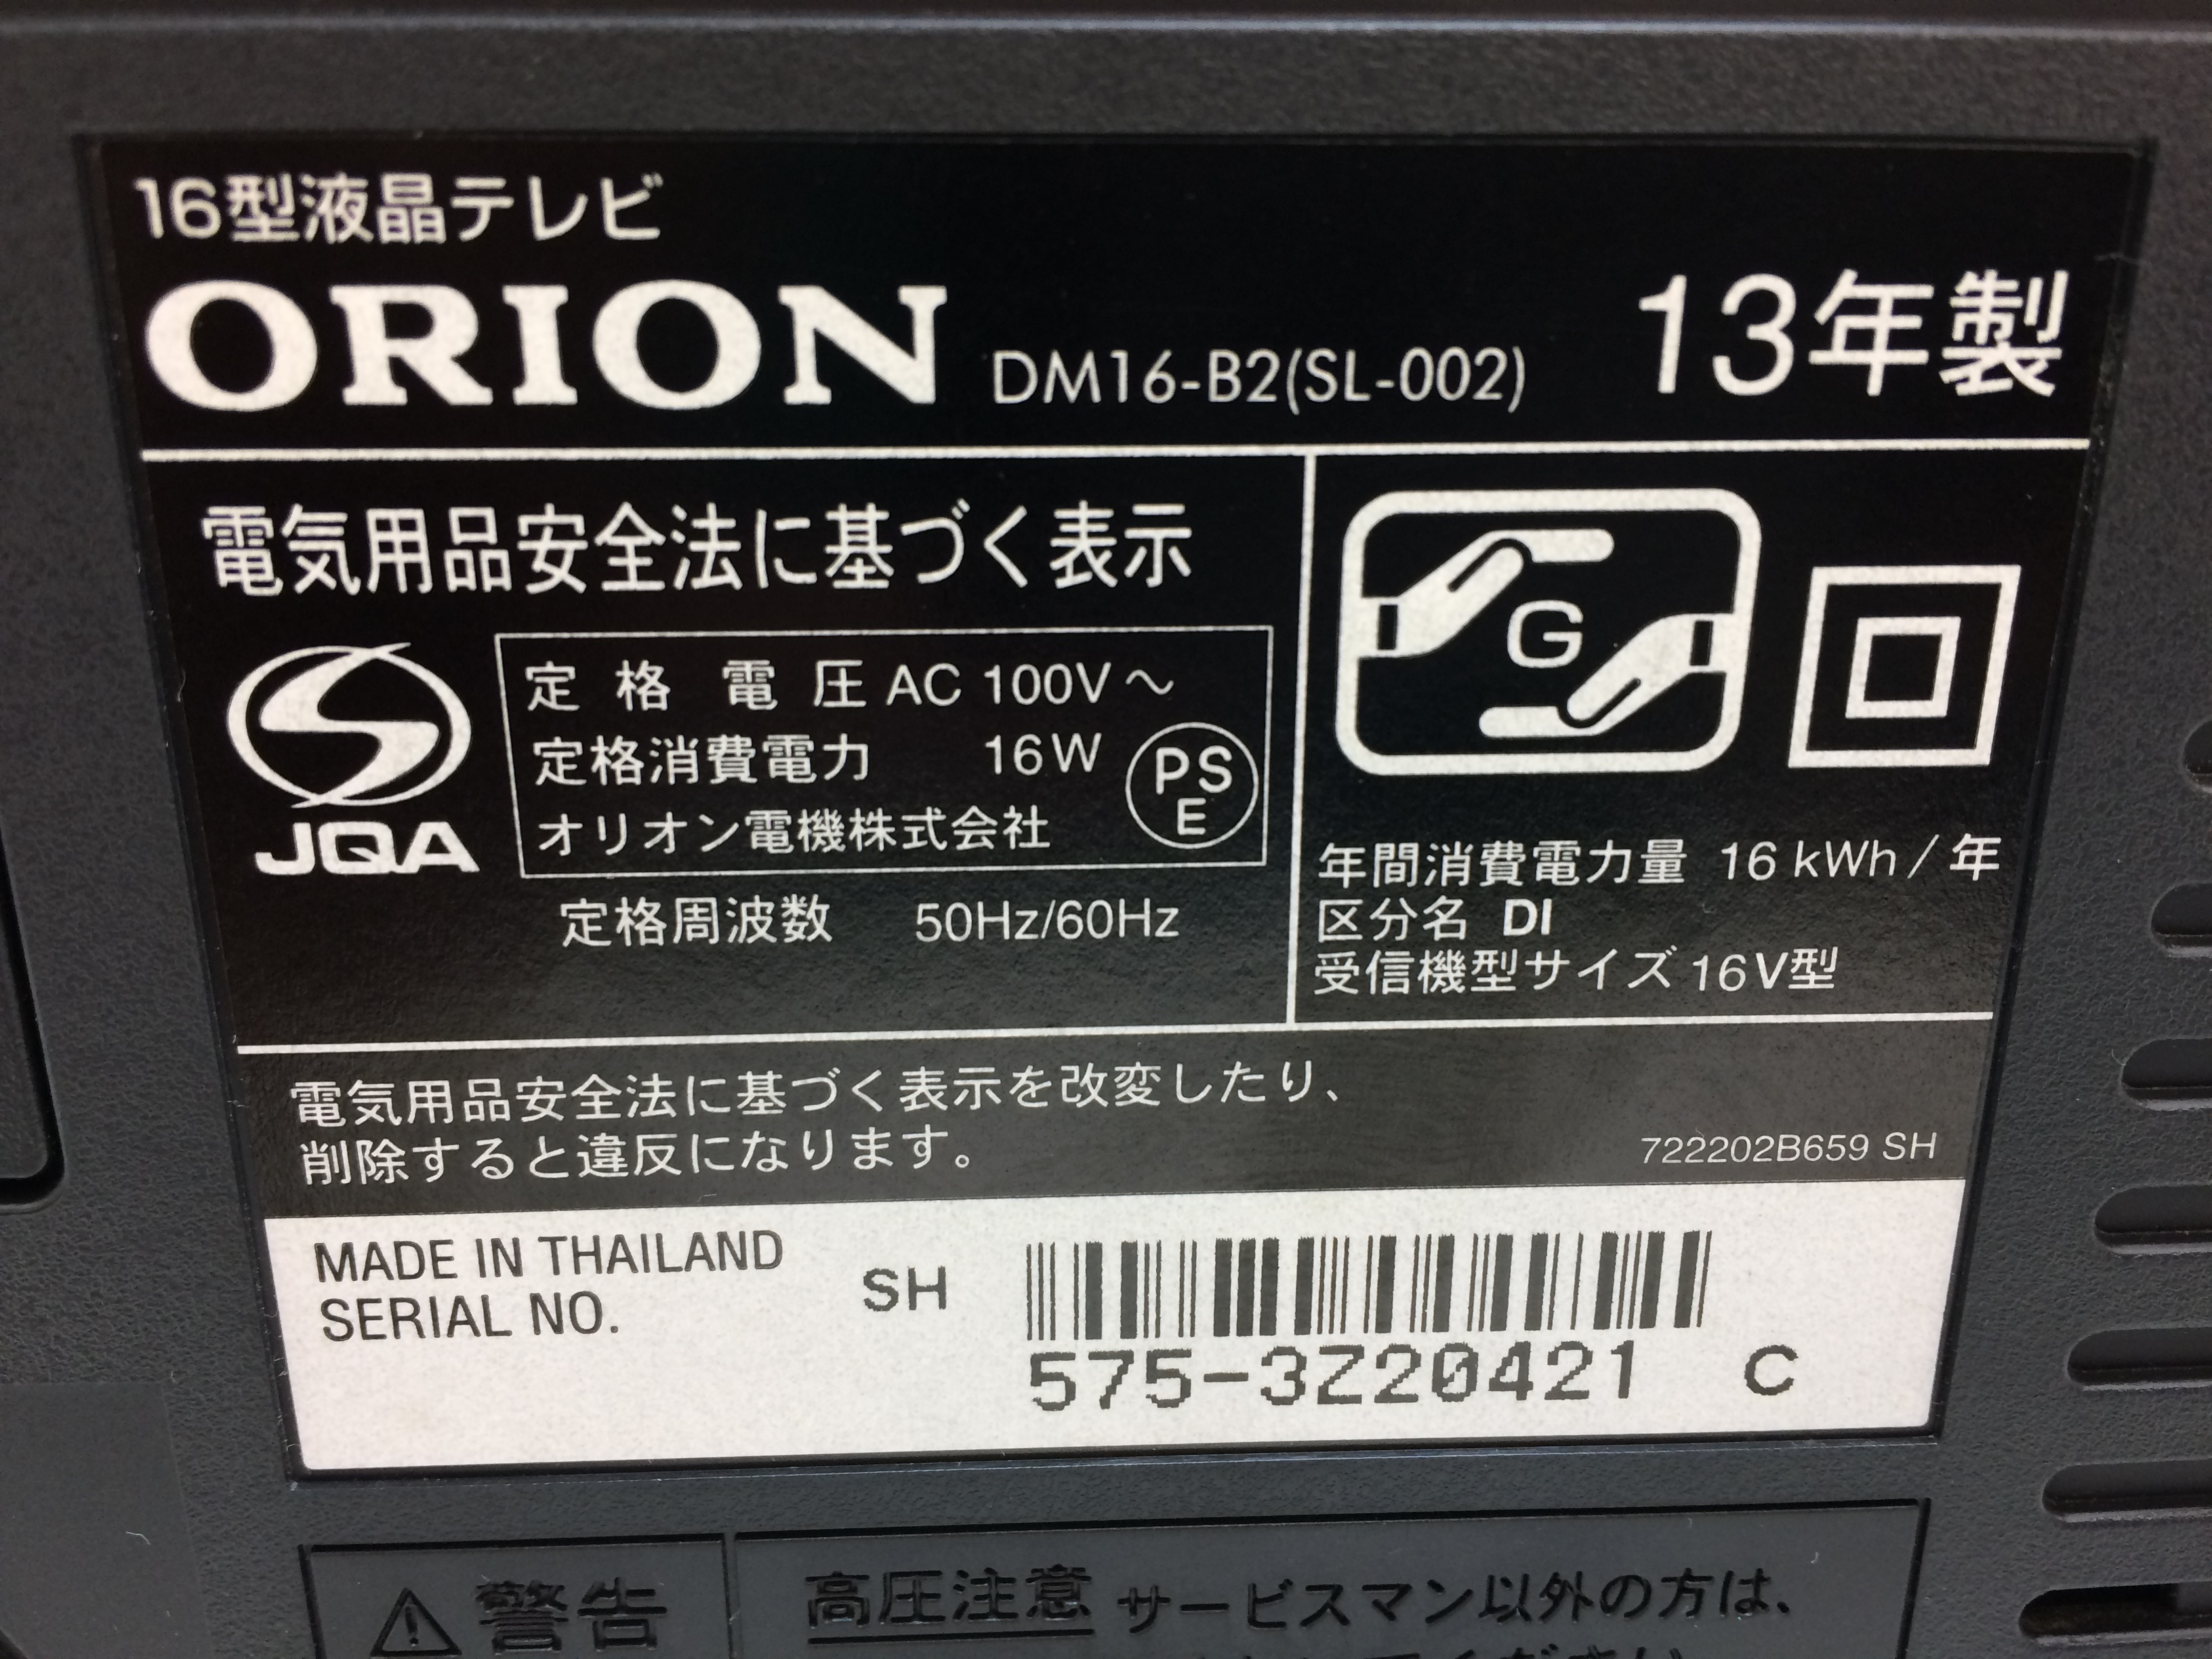 ORION 16型液晶テレビ DM16-B2 三重県伊勢市松阪市津市